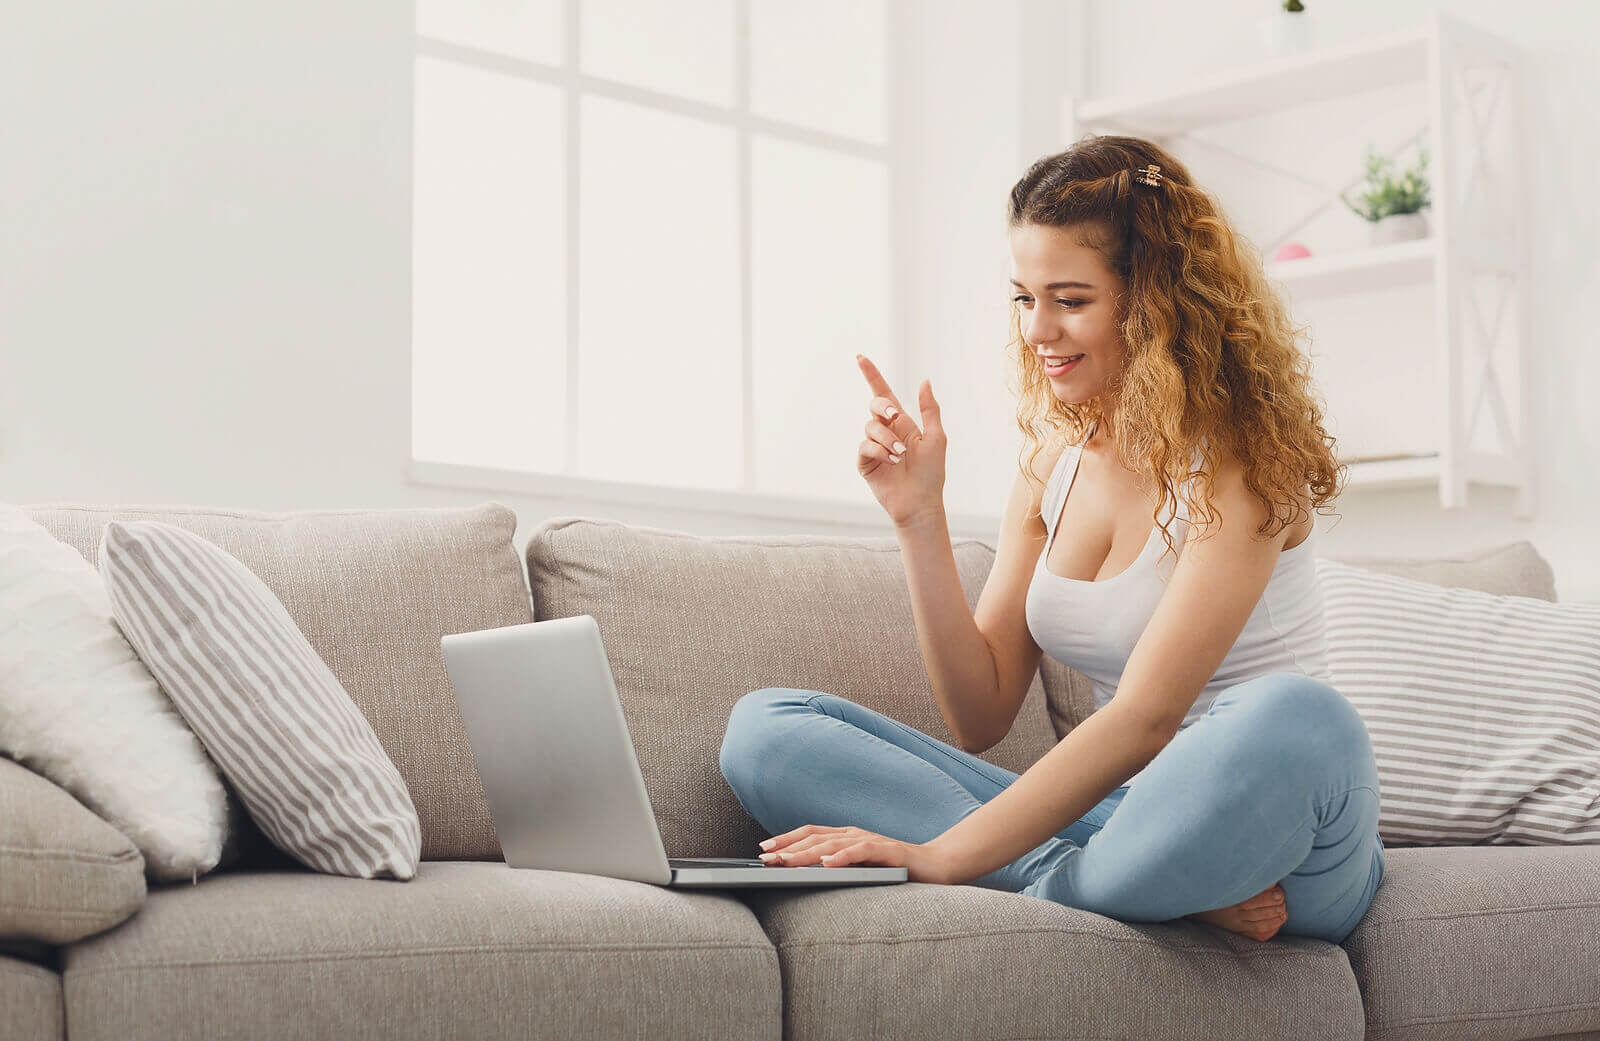 university student sat on sofa having video call on laptop with partner